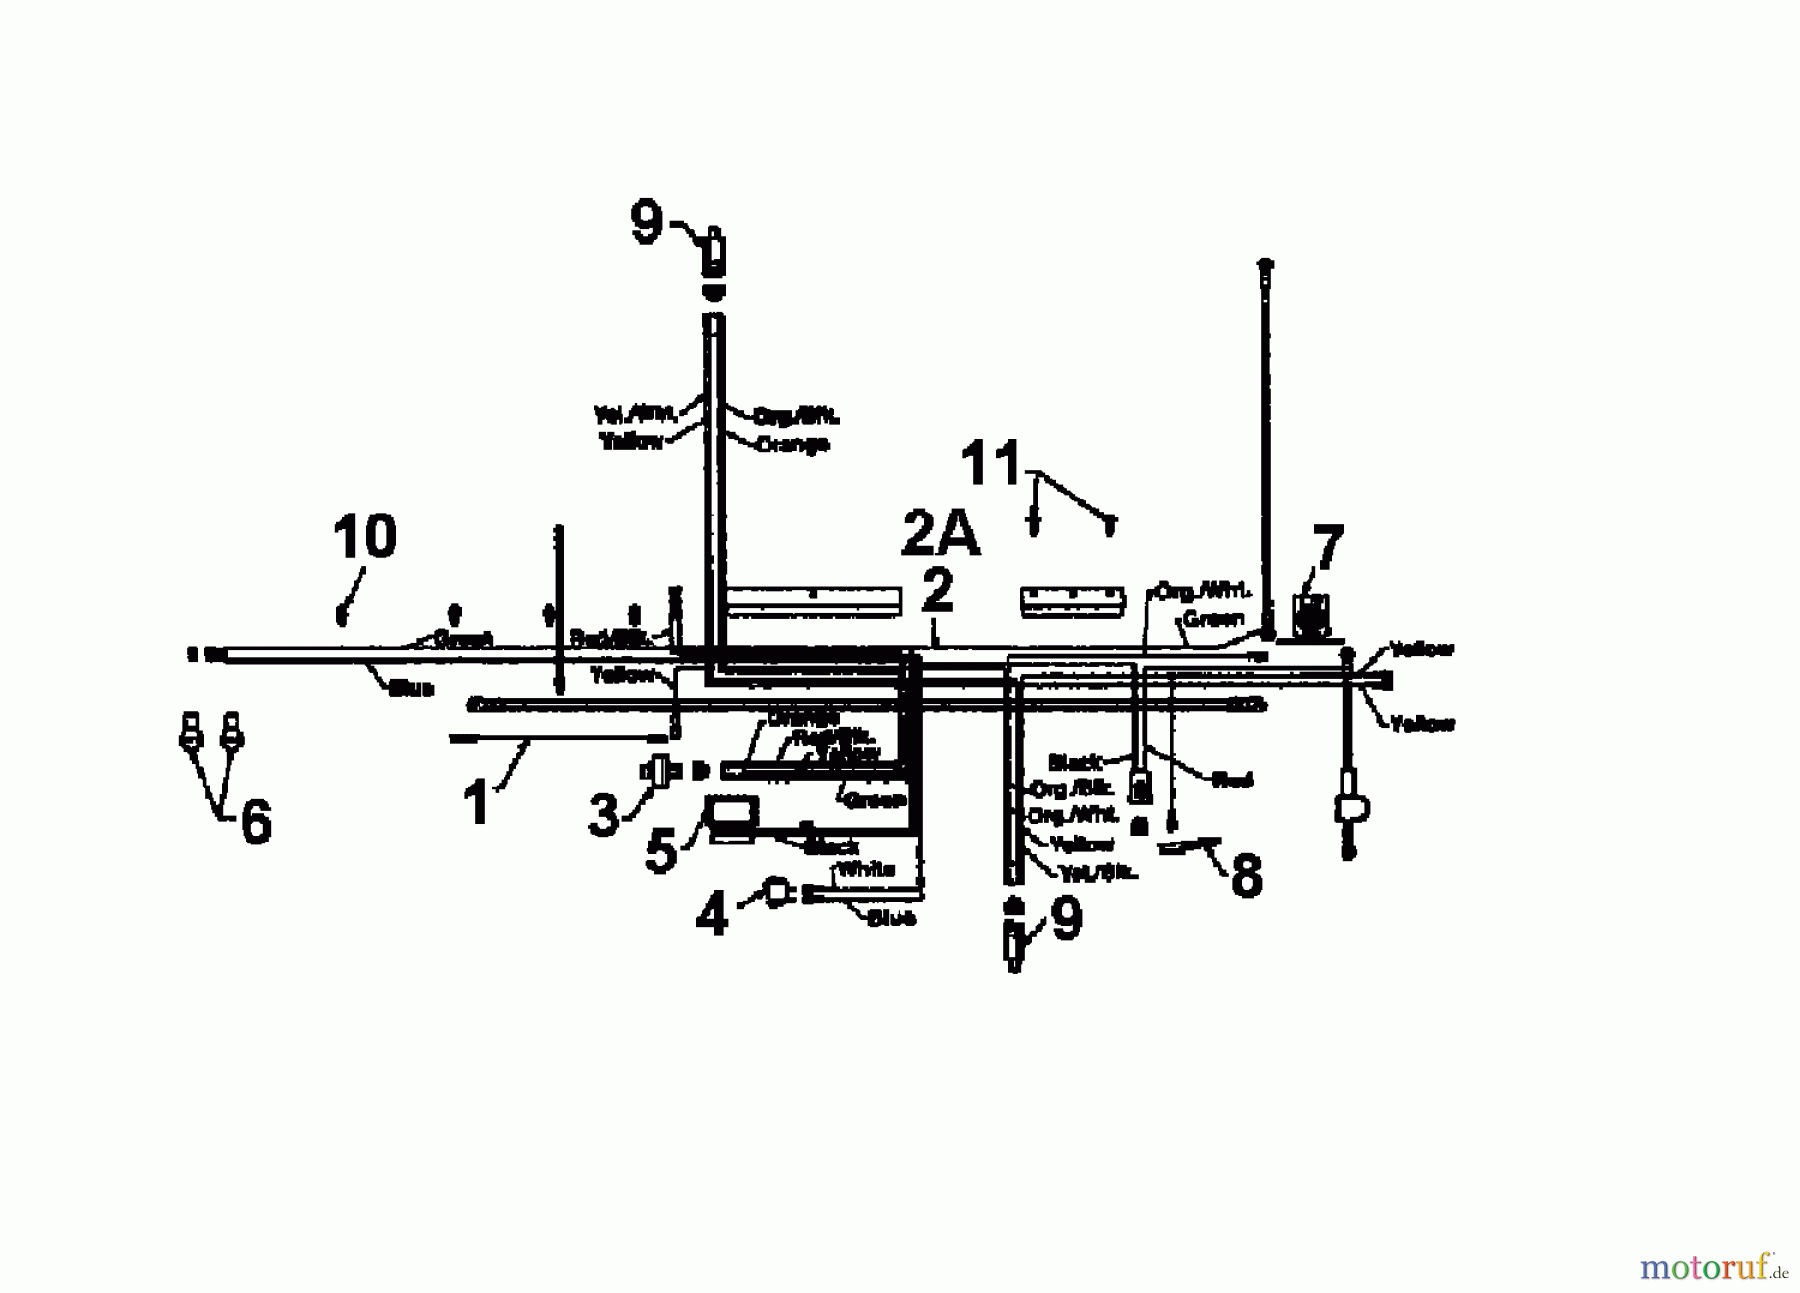  Gutbrod Lawn tractors Sprint 900 136N695F604  (1996) Wiring diagram single cylinder